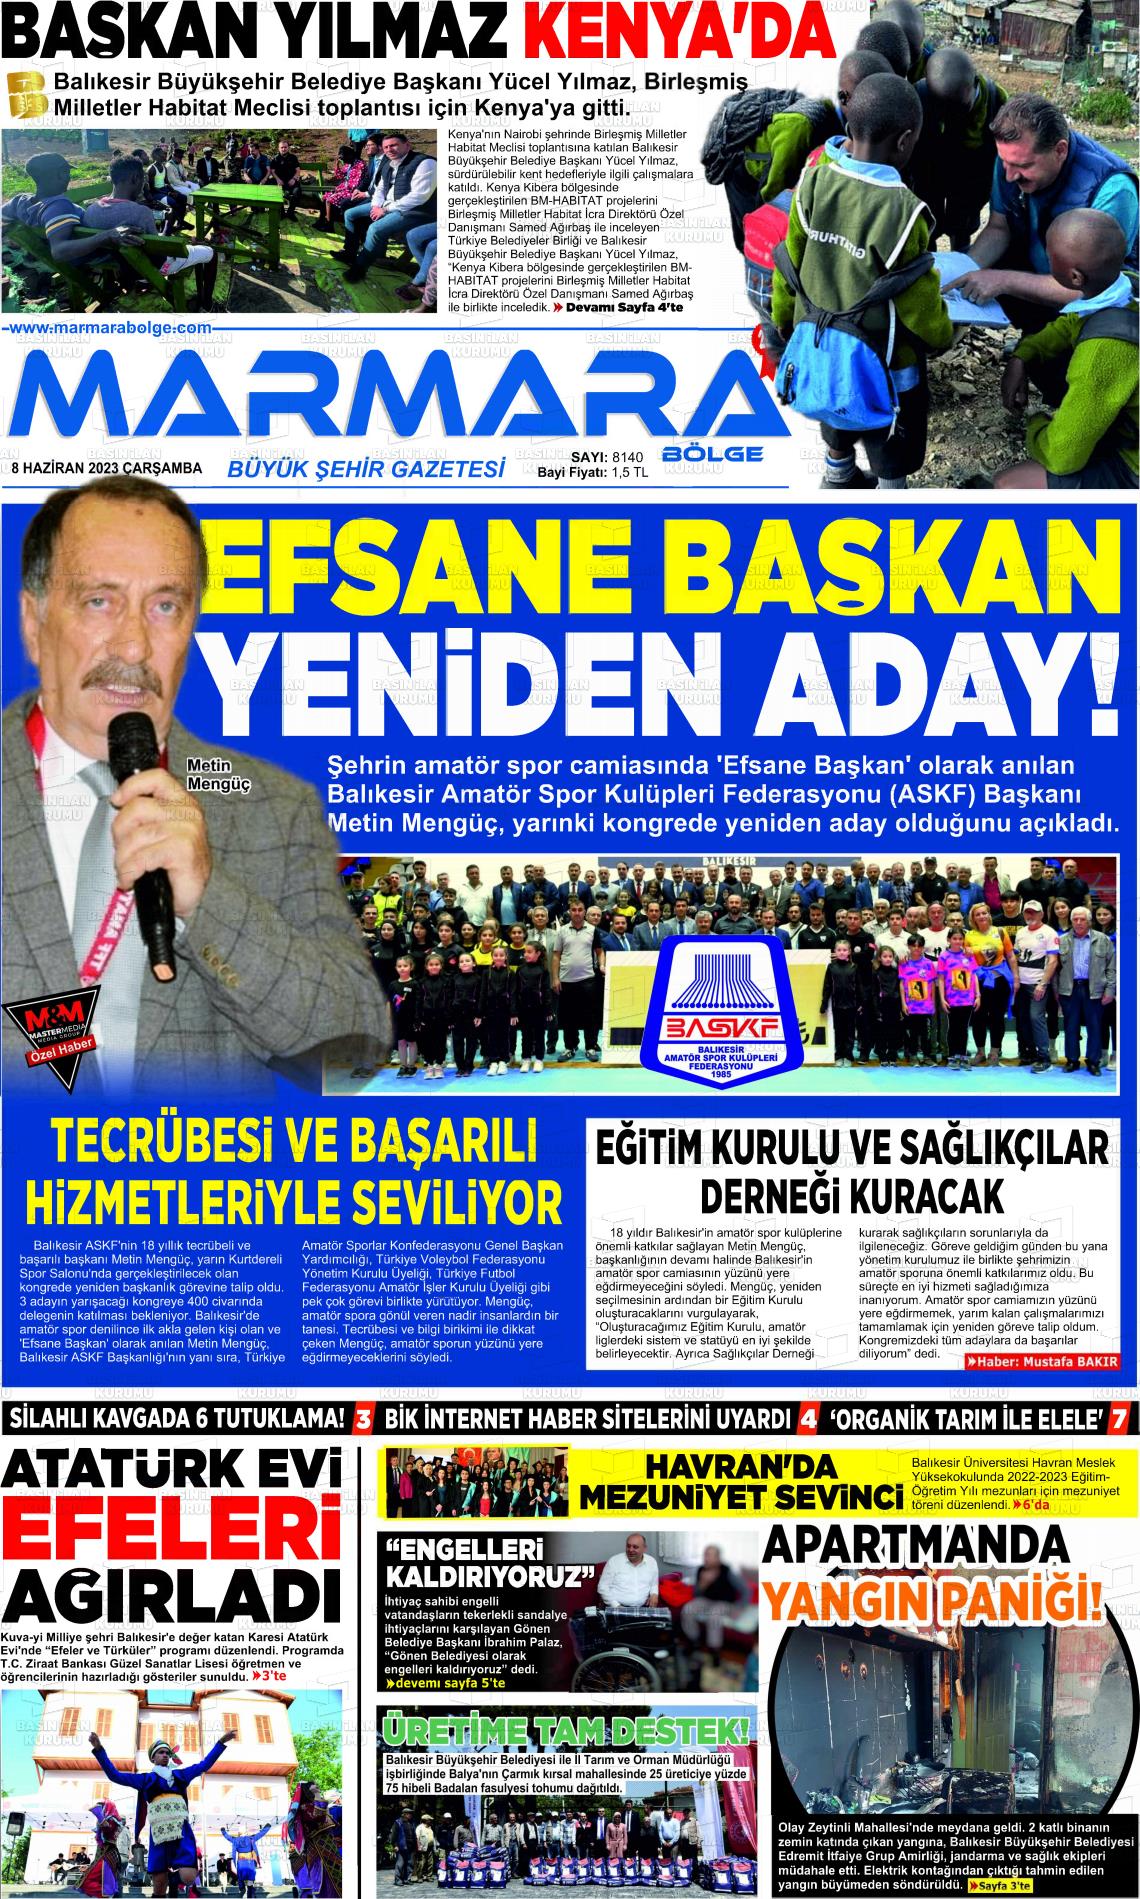 08 Haziran 2023 Marmara Bölge Gazete Manşeti